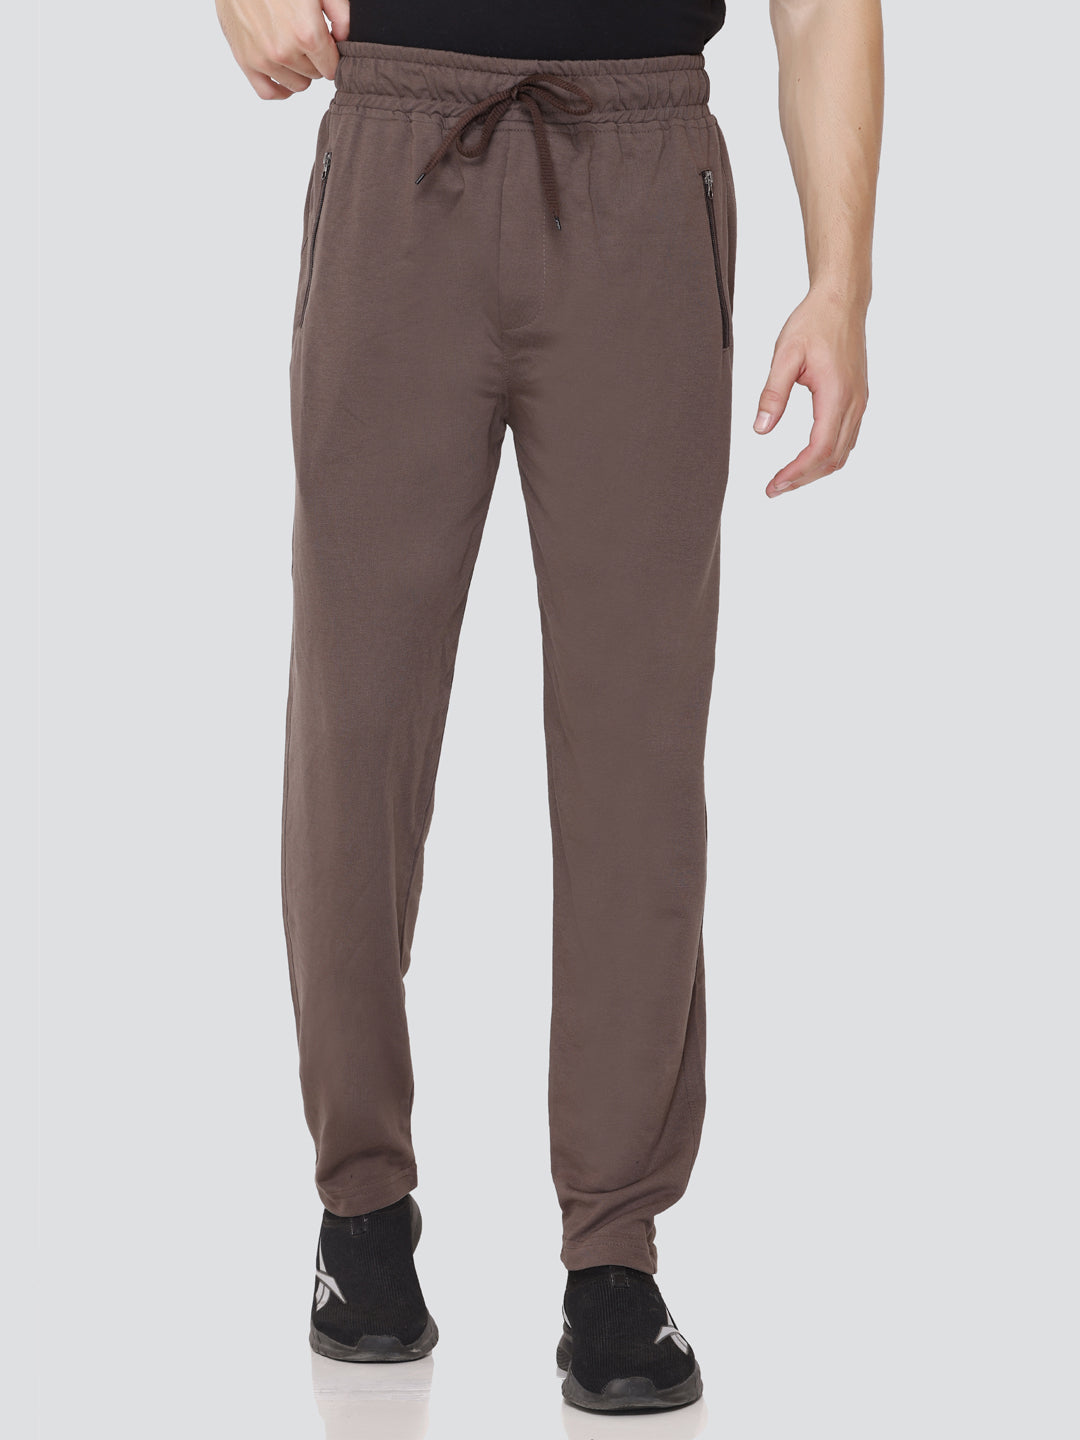 PB & J Cotton Regular Fit Pyjamas for Men | Combo- Pack of 2 | Premium  Cotton Lower Lounge Pants - Price History